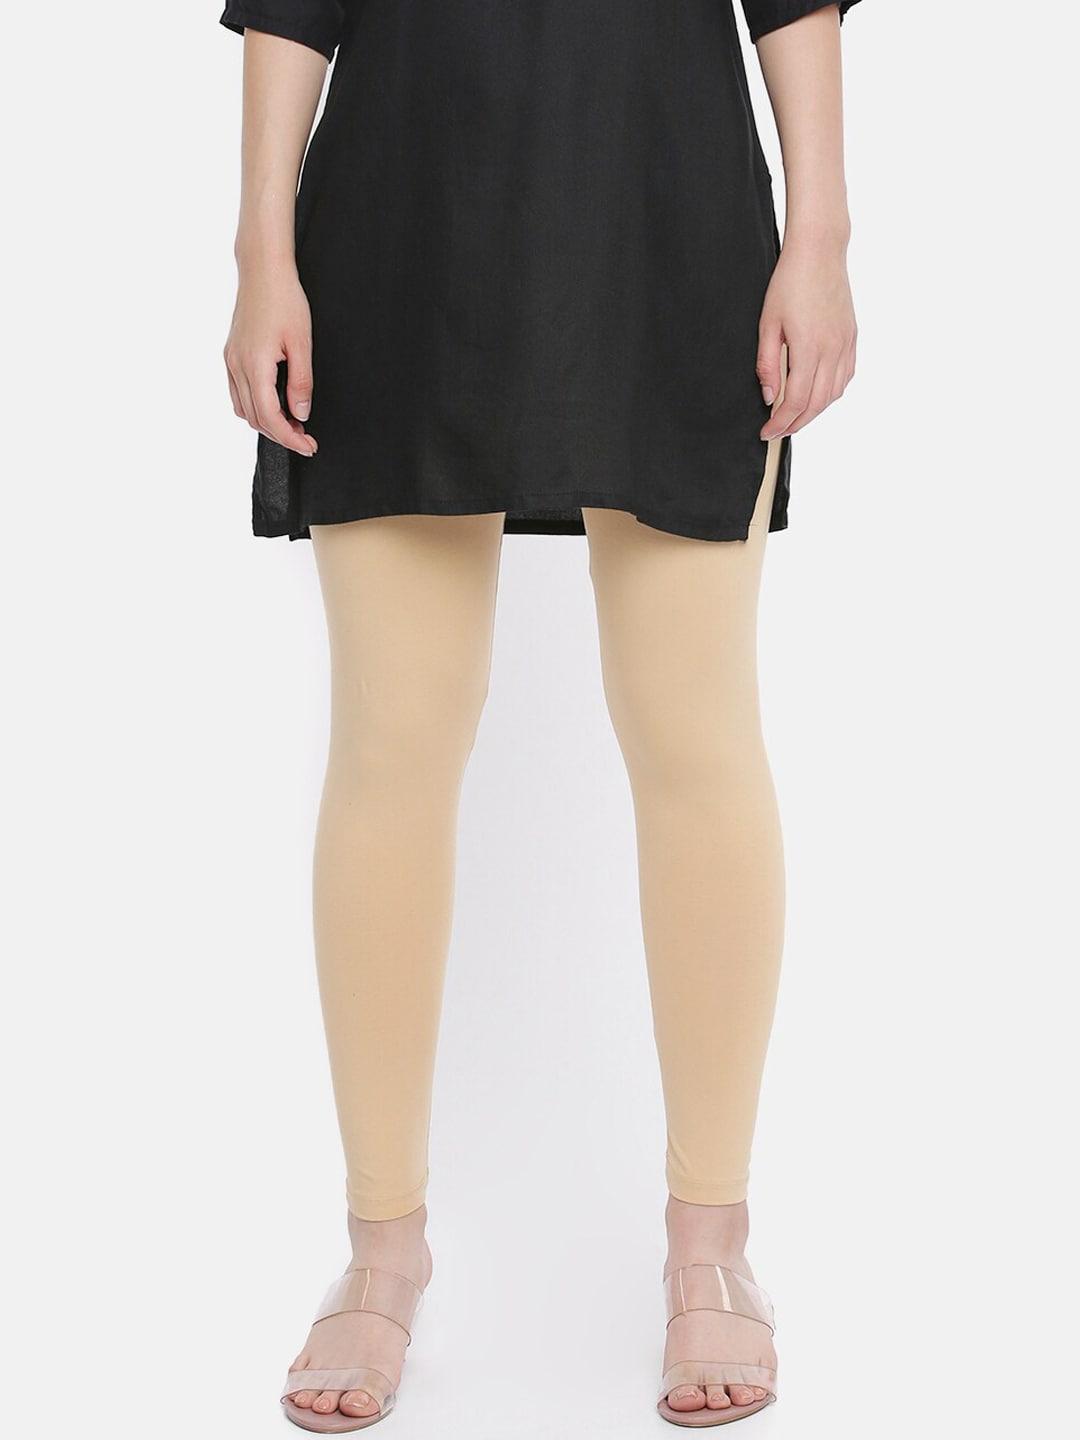 dollar missy women beige solid ankle-length leggings